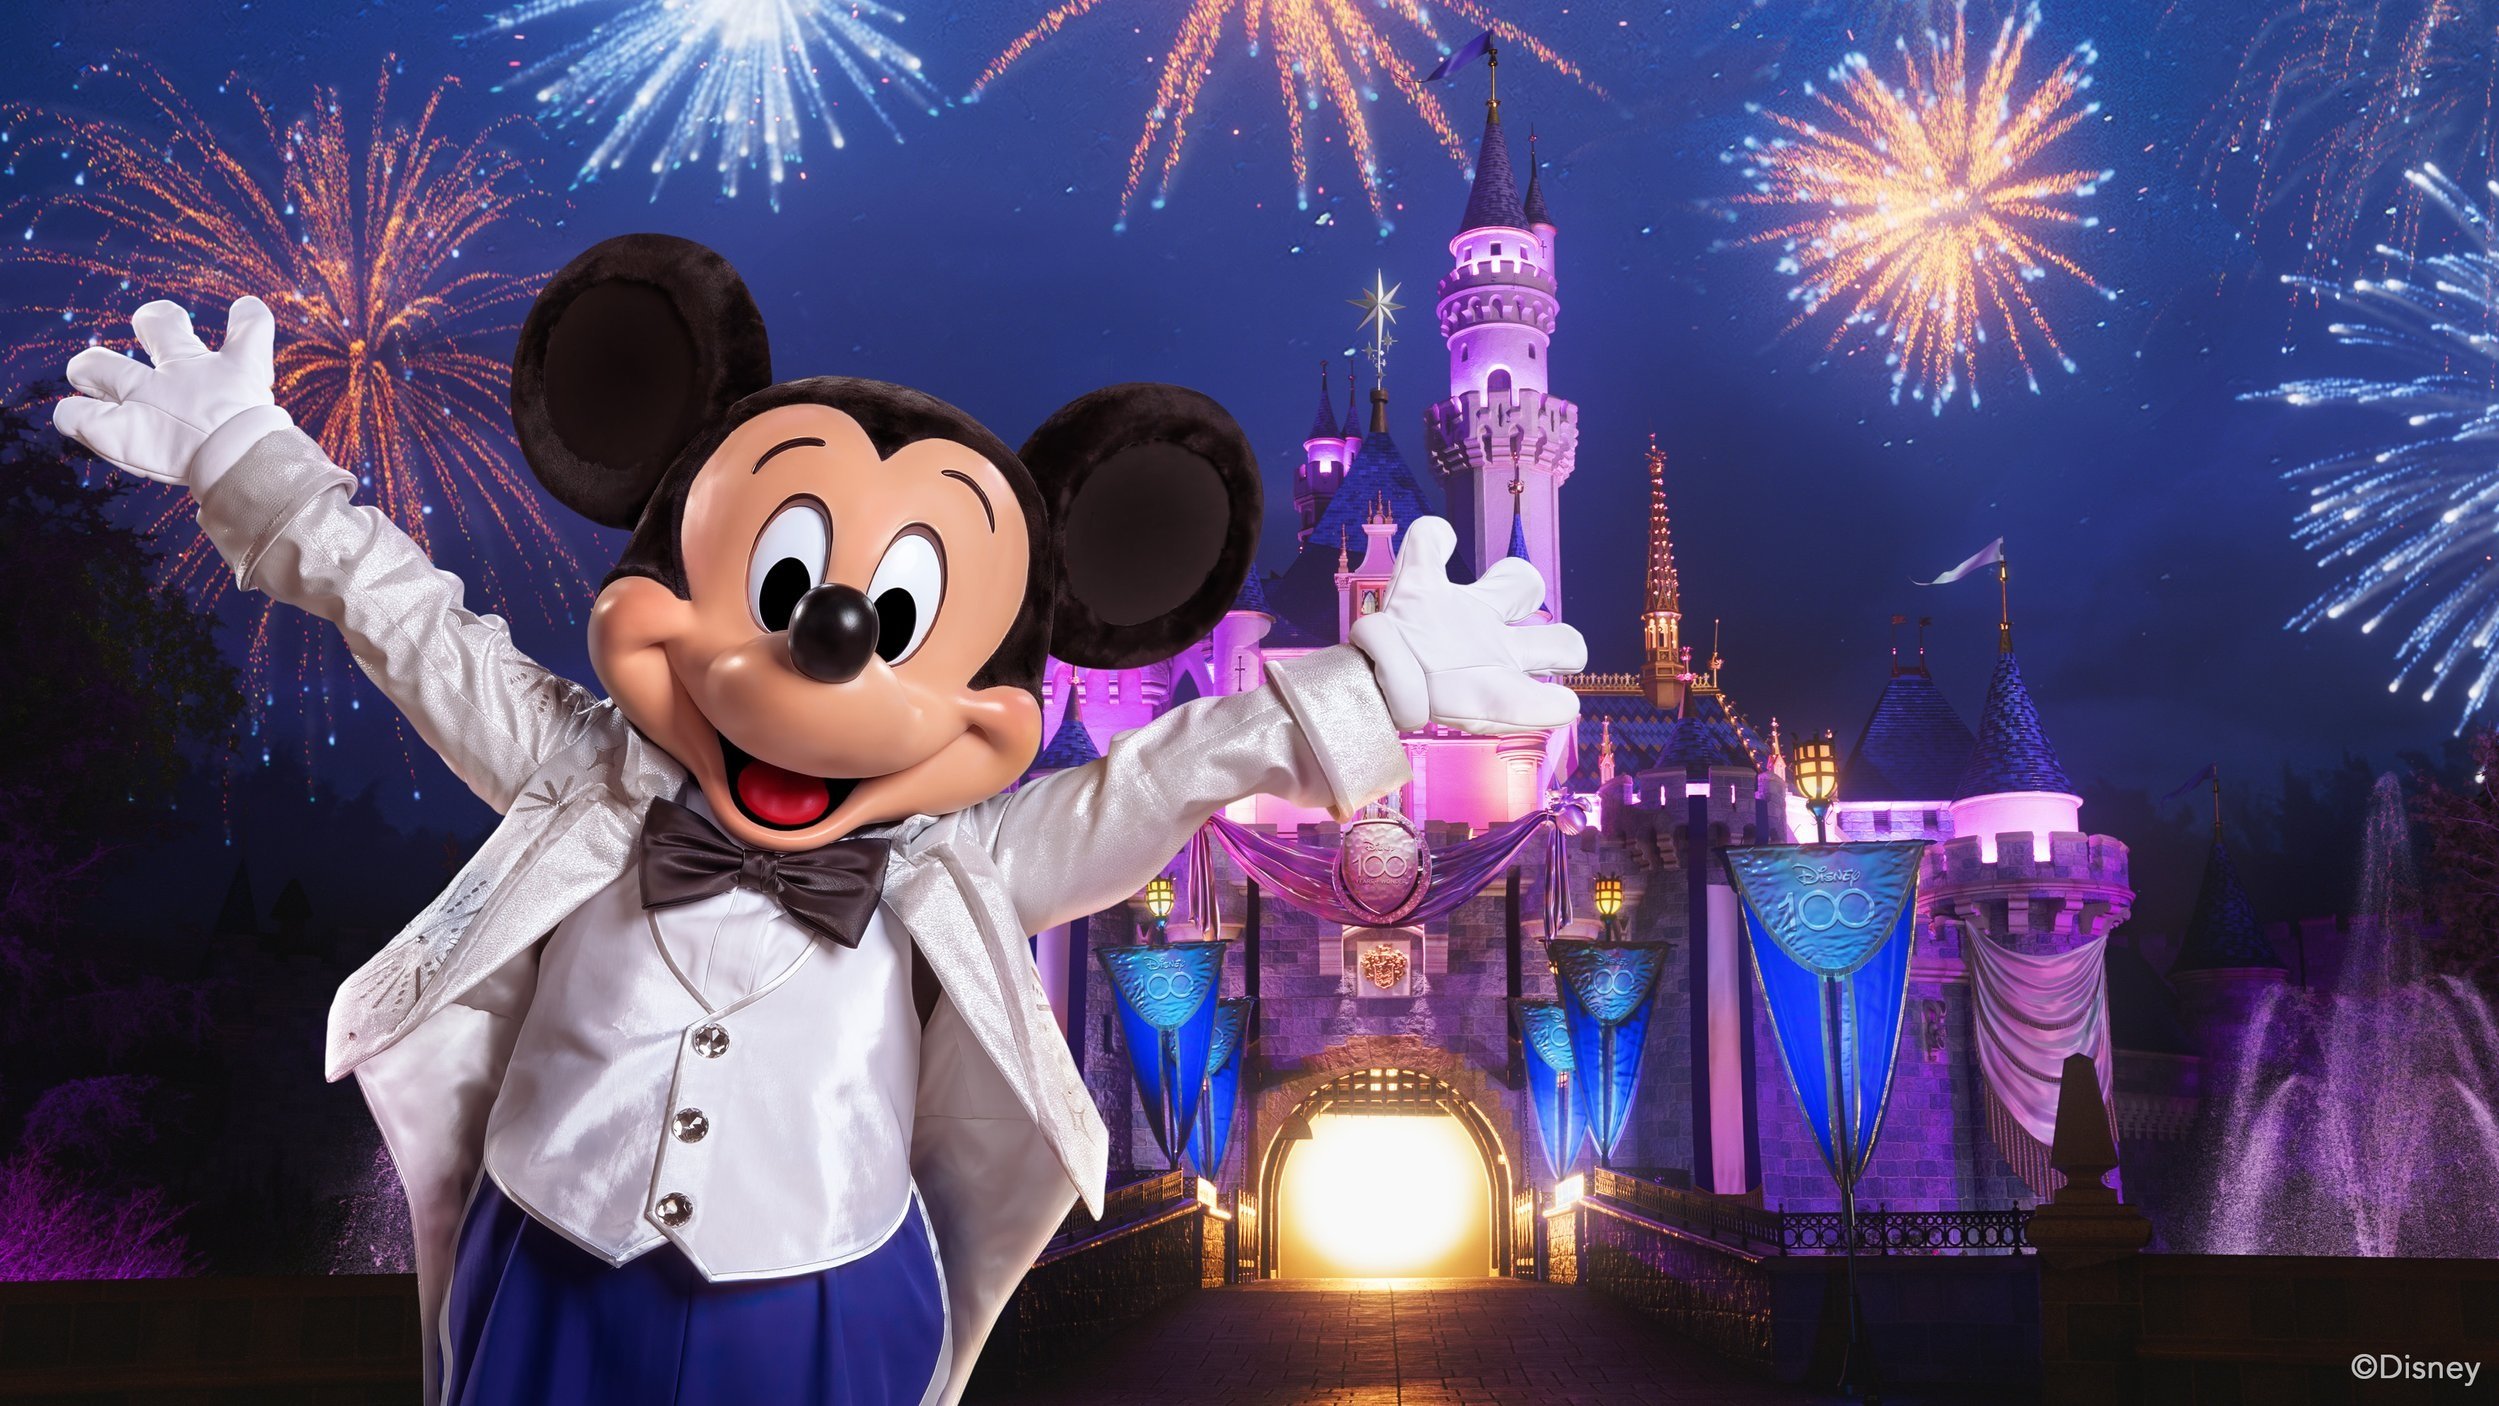 Disneyland ticket prices quadruple since 2000, annual passes up 700%